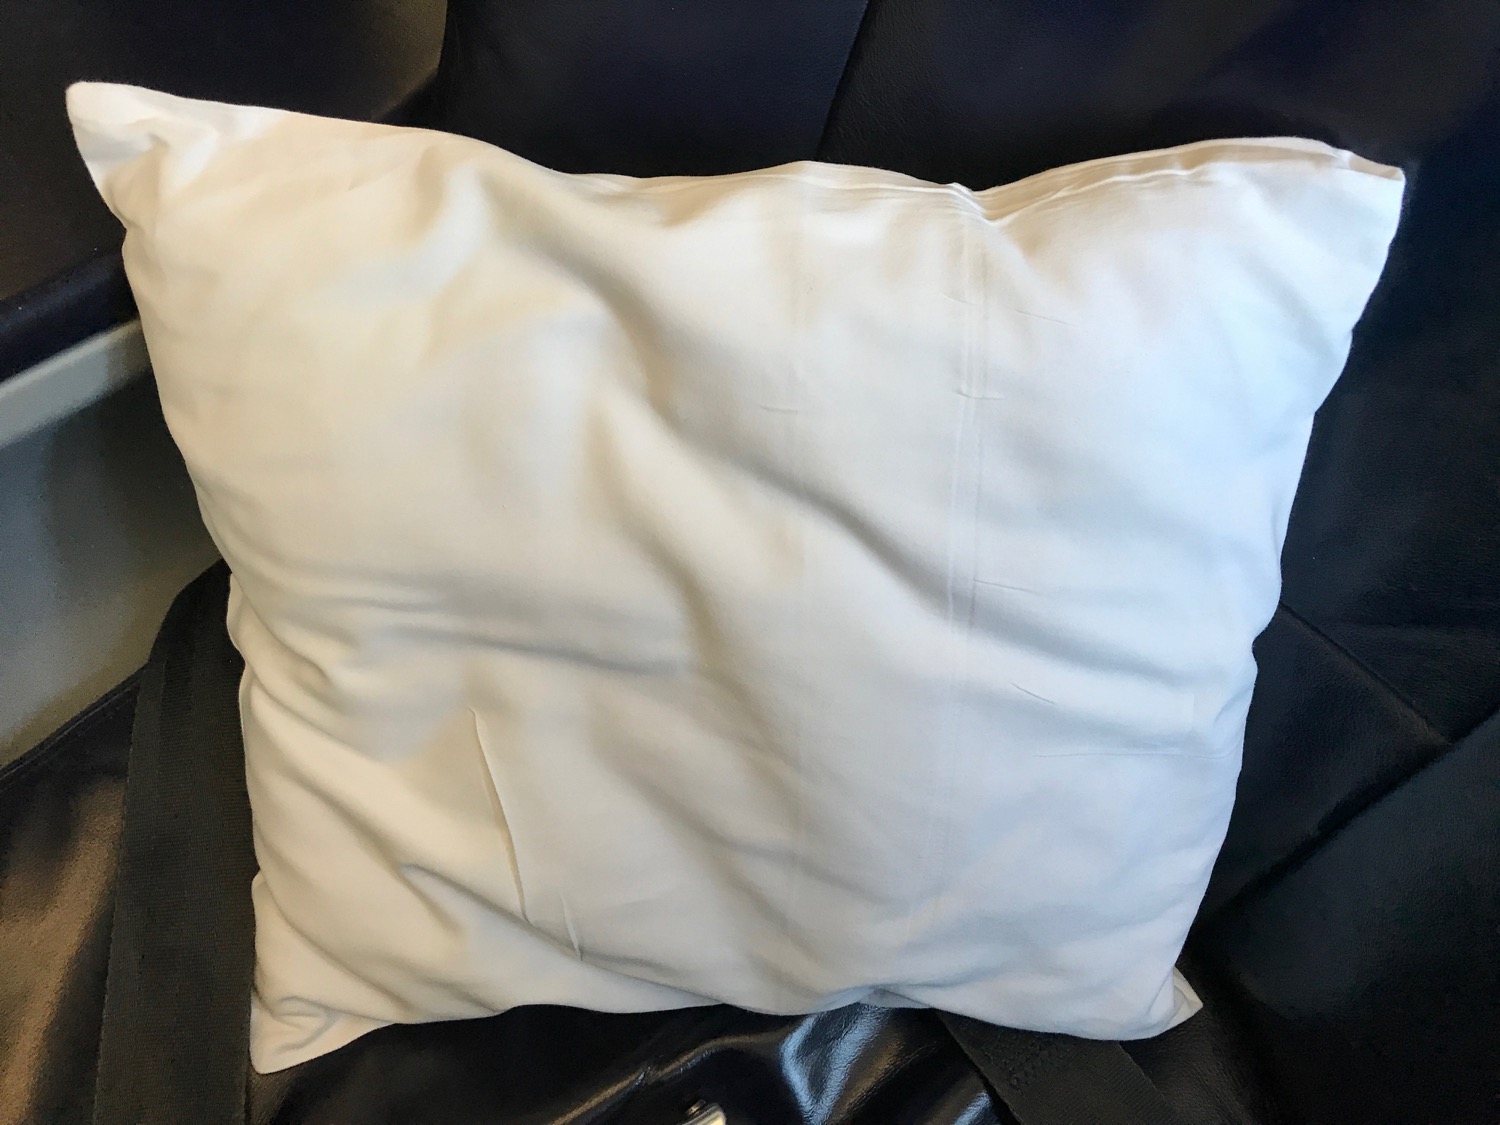 a white pillow on a black chair